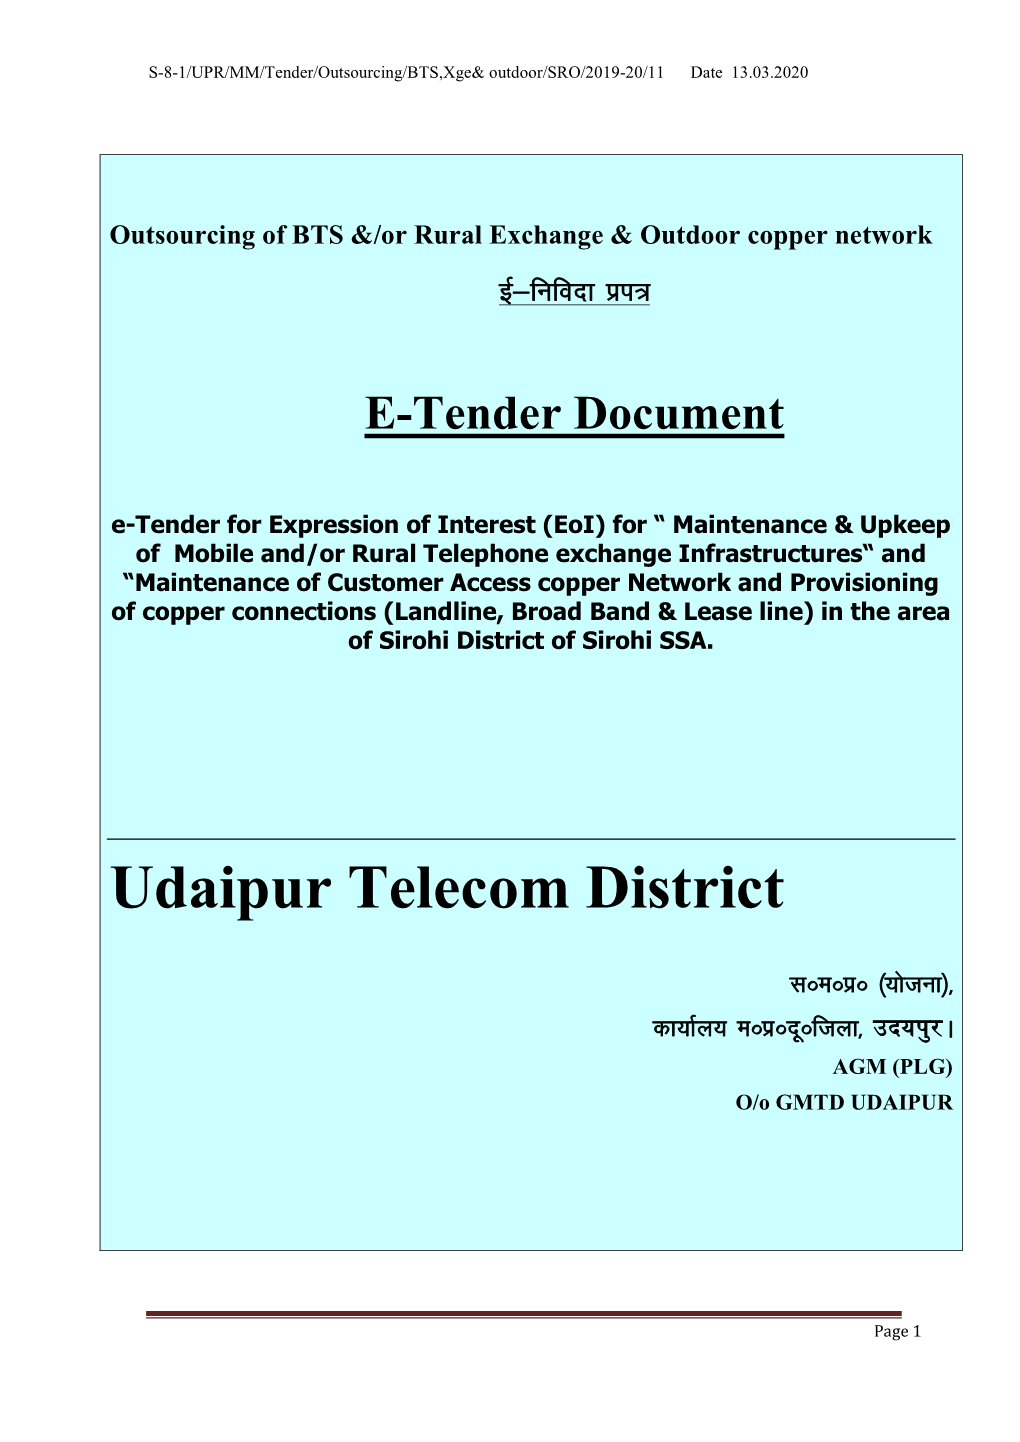 Udaipur Telecom District